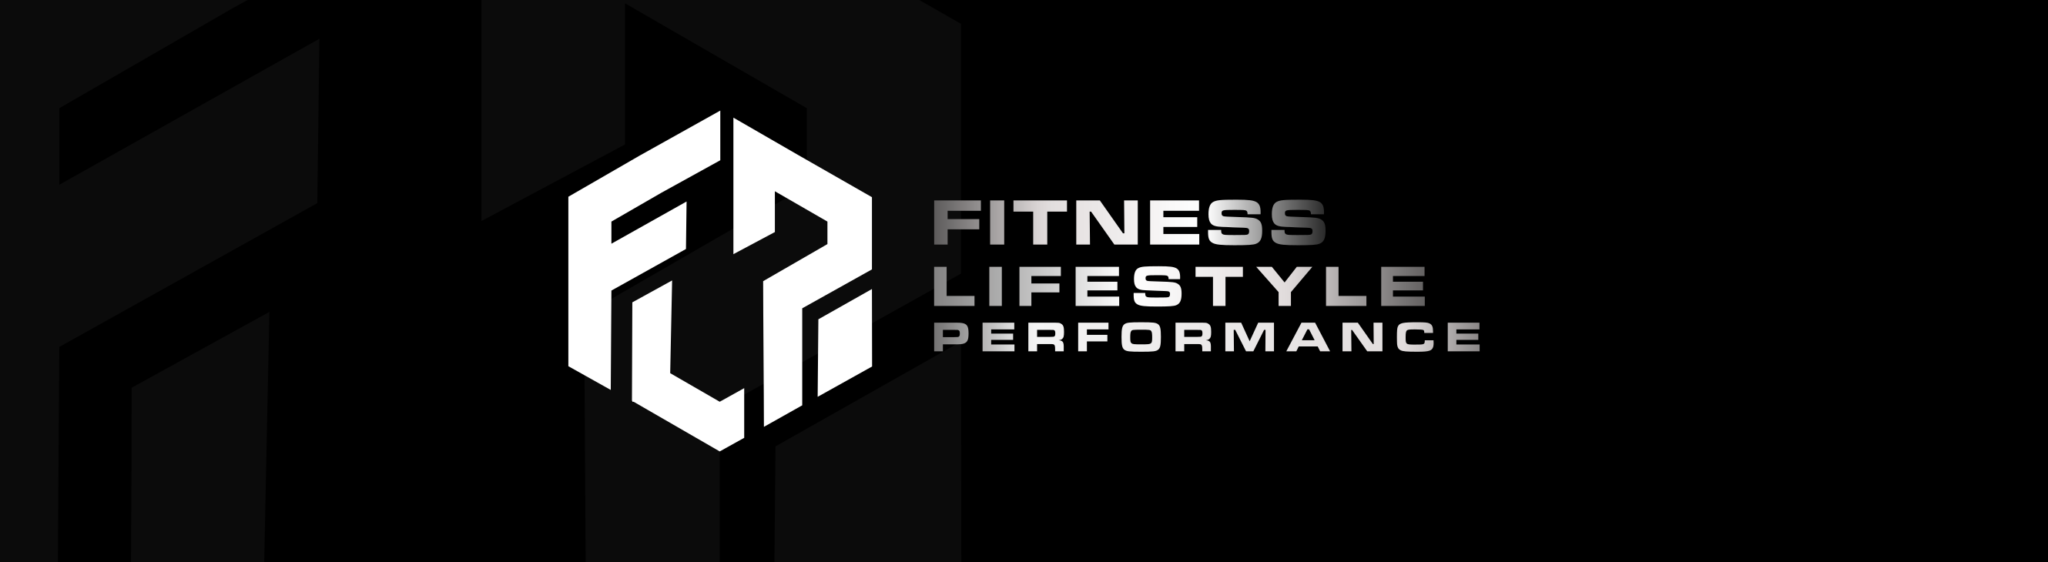 Fitness Lifestyle Performance